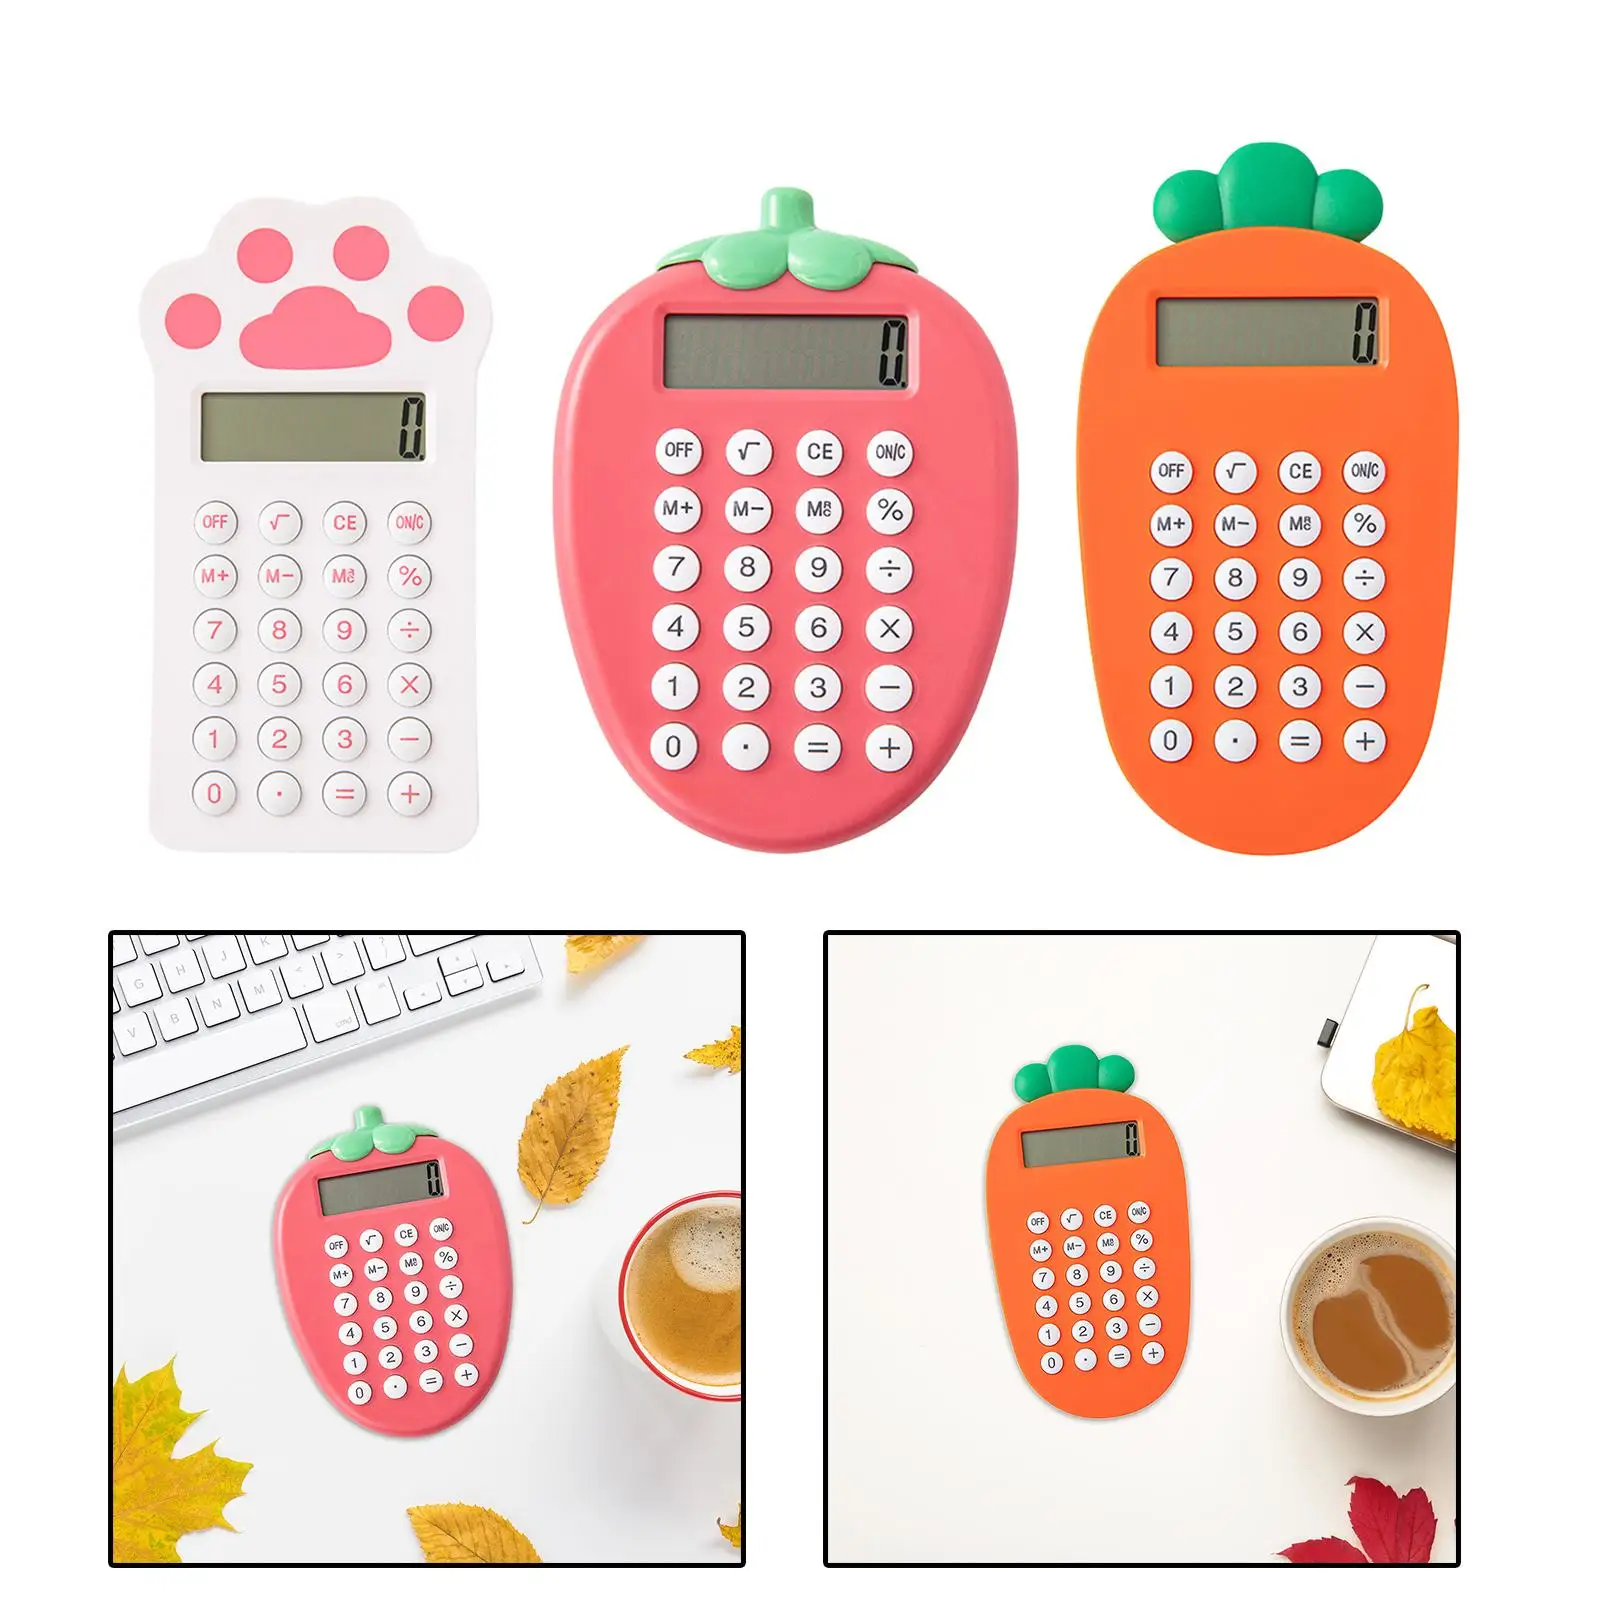 Small Calculator Cute Calculator Smart Calculator 8 Digit Digital Desktop Calculator Basic Standard Calculators for Home Office